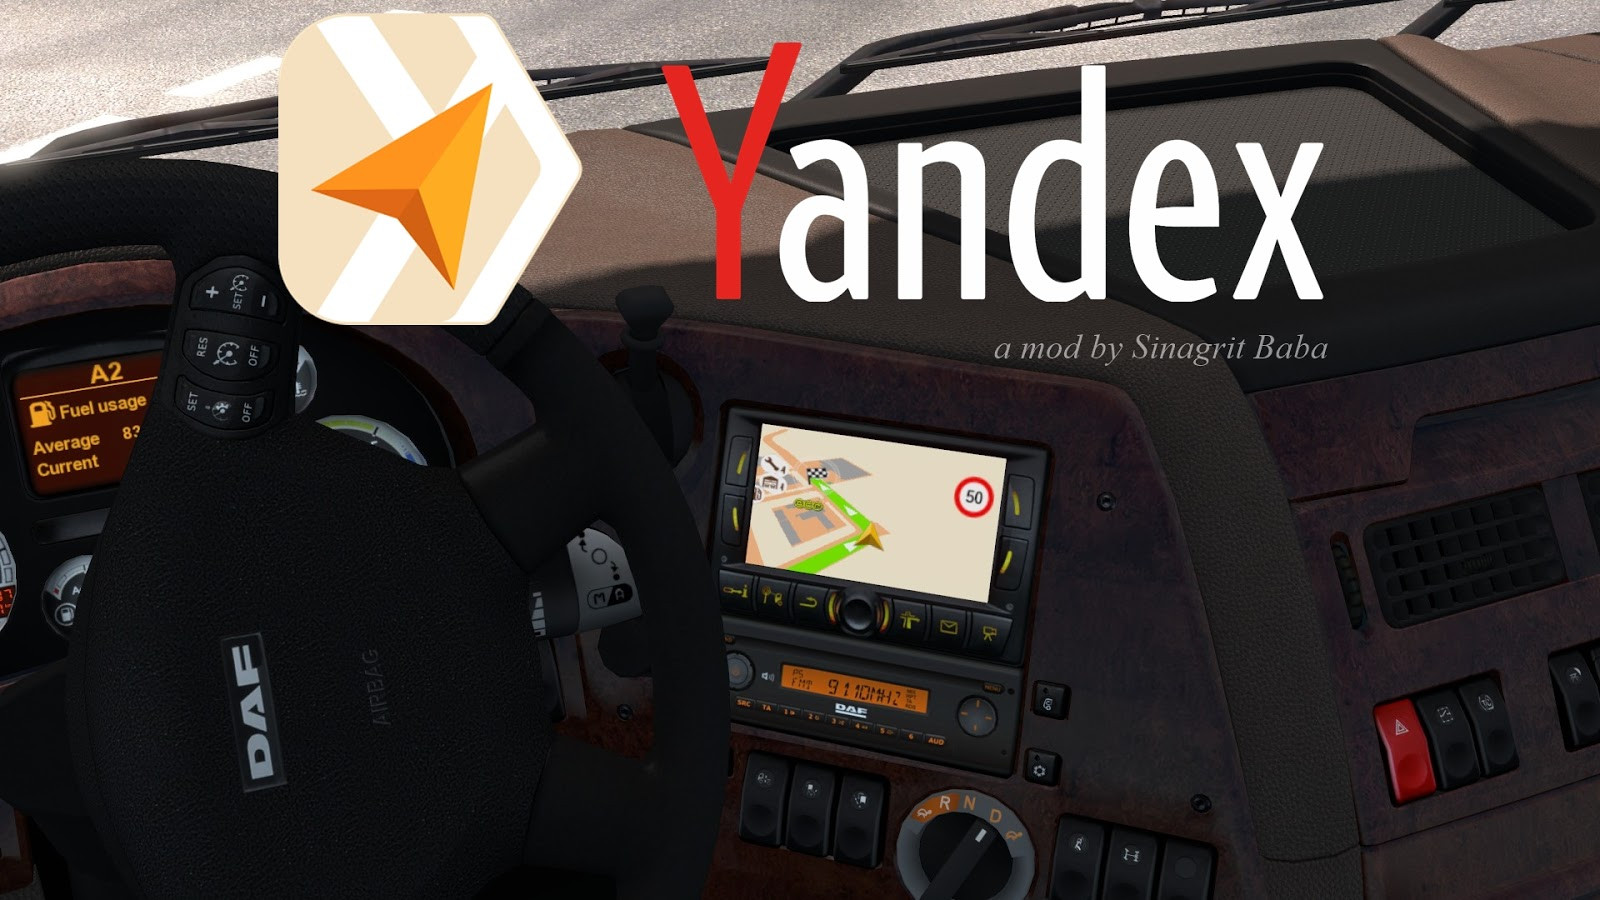 download yandex gps navigator